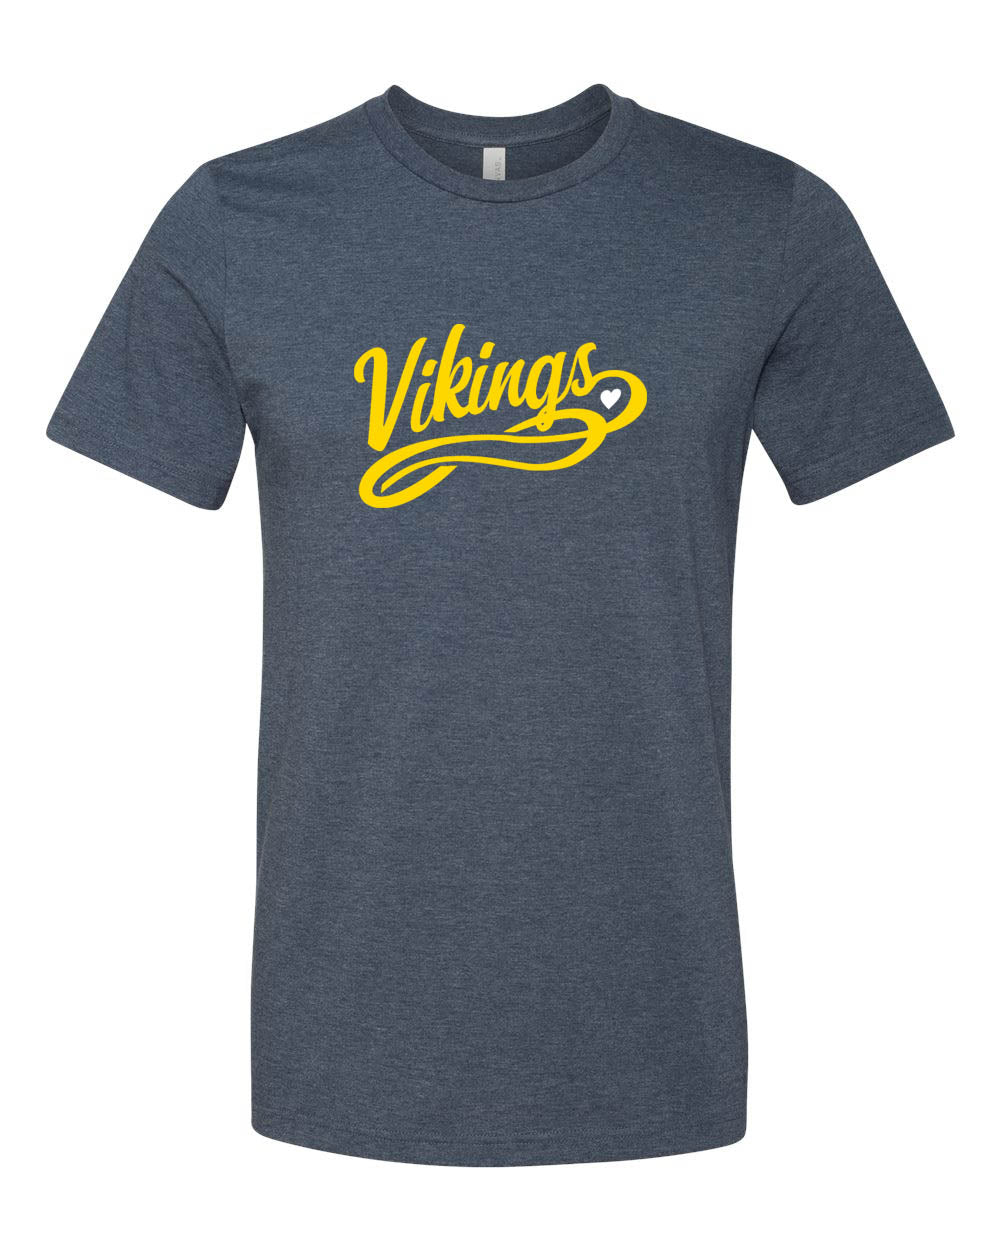 Vernon design 3 t-Shirt